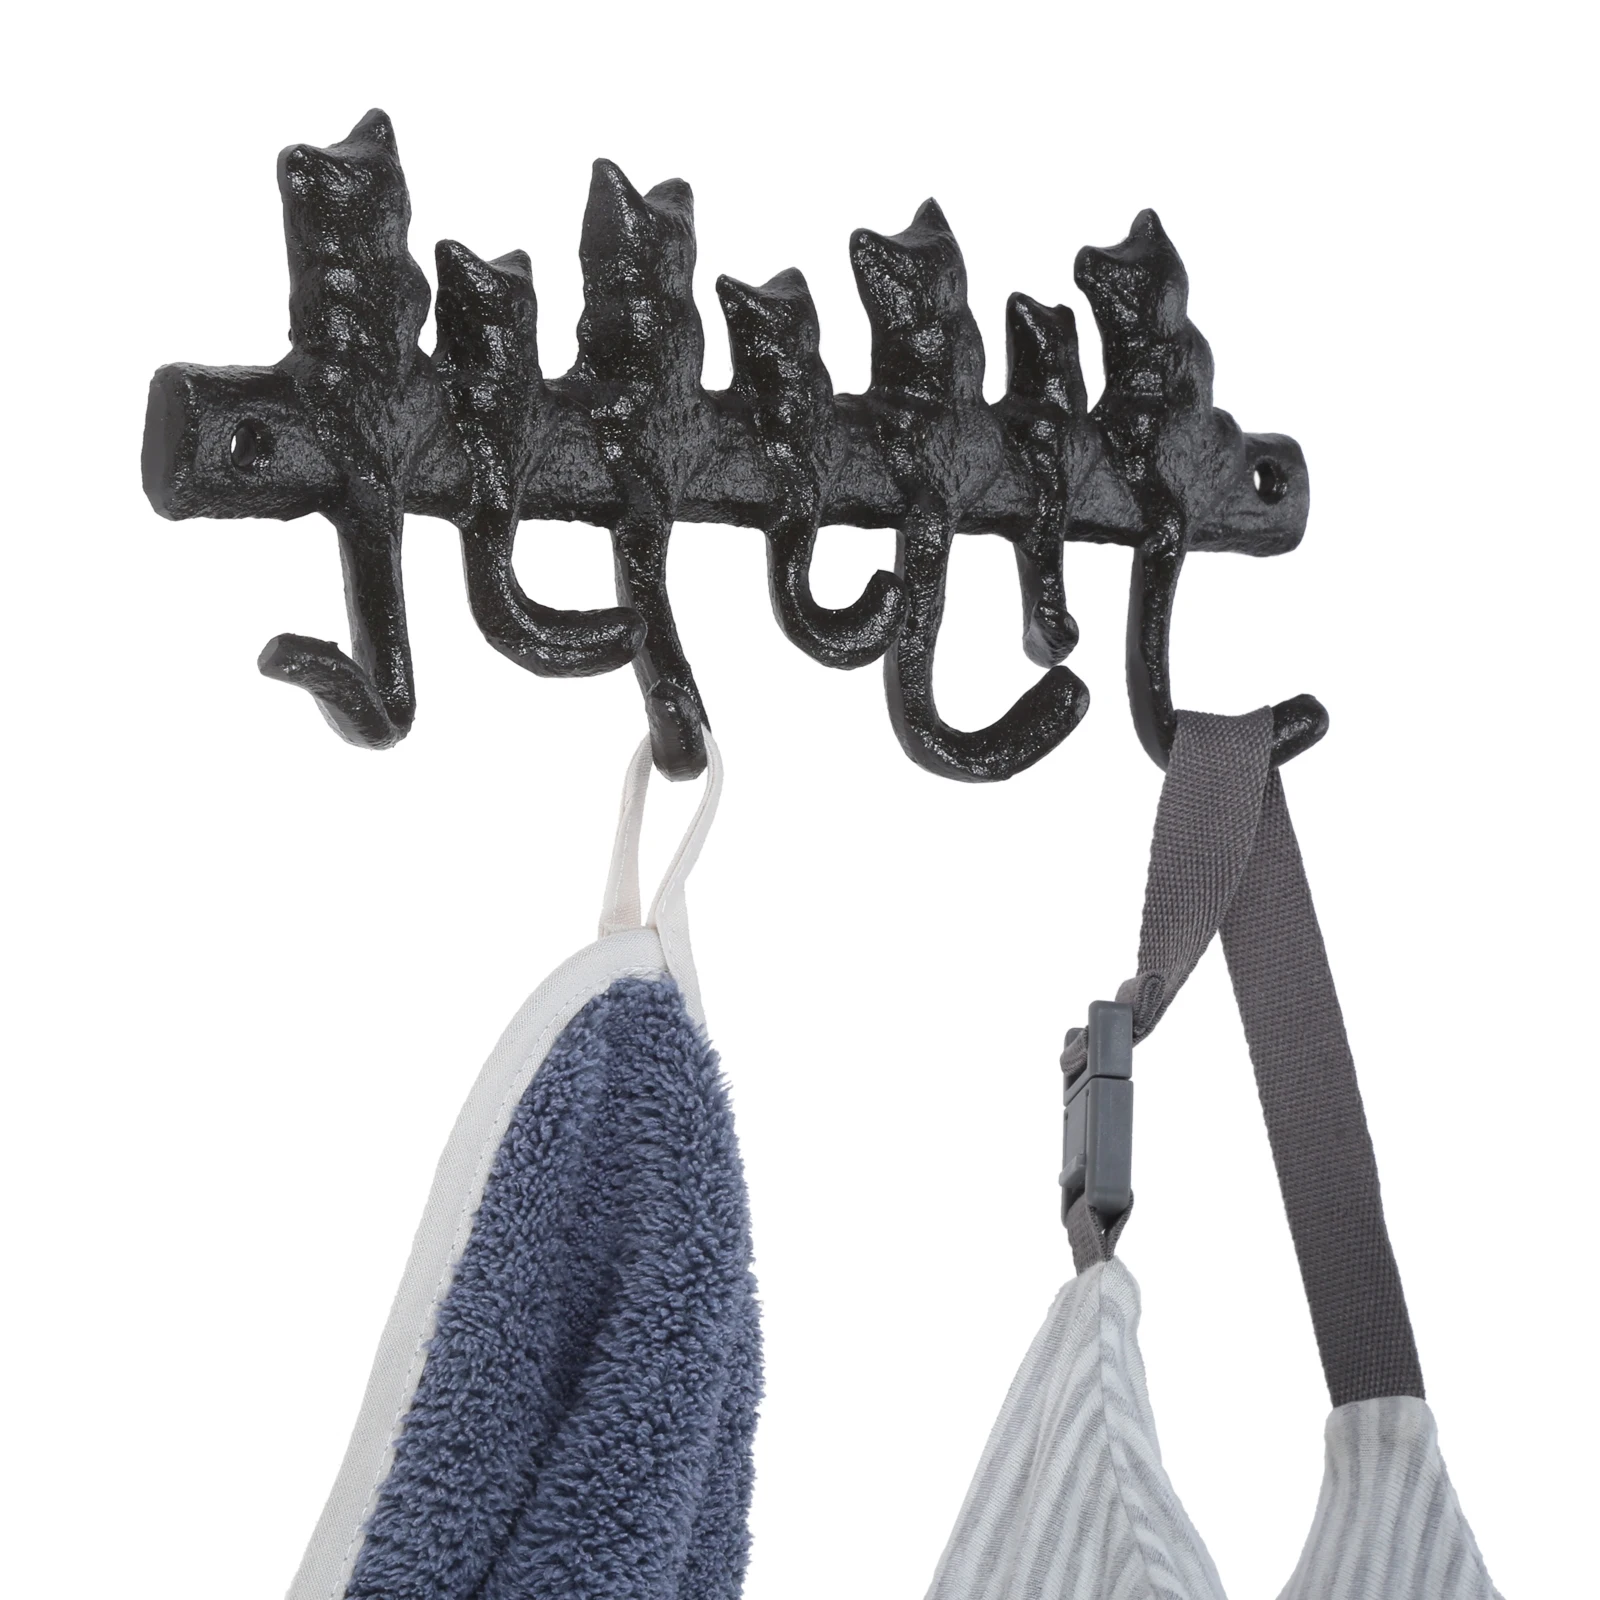 7 Cats Cast Iron Wall-mounted Row Hooks Keys Holder with 7 Hooks Retro Key Hanger Coat Hat Racks Kitchen Bathroom Accessories